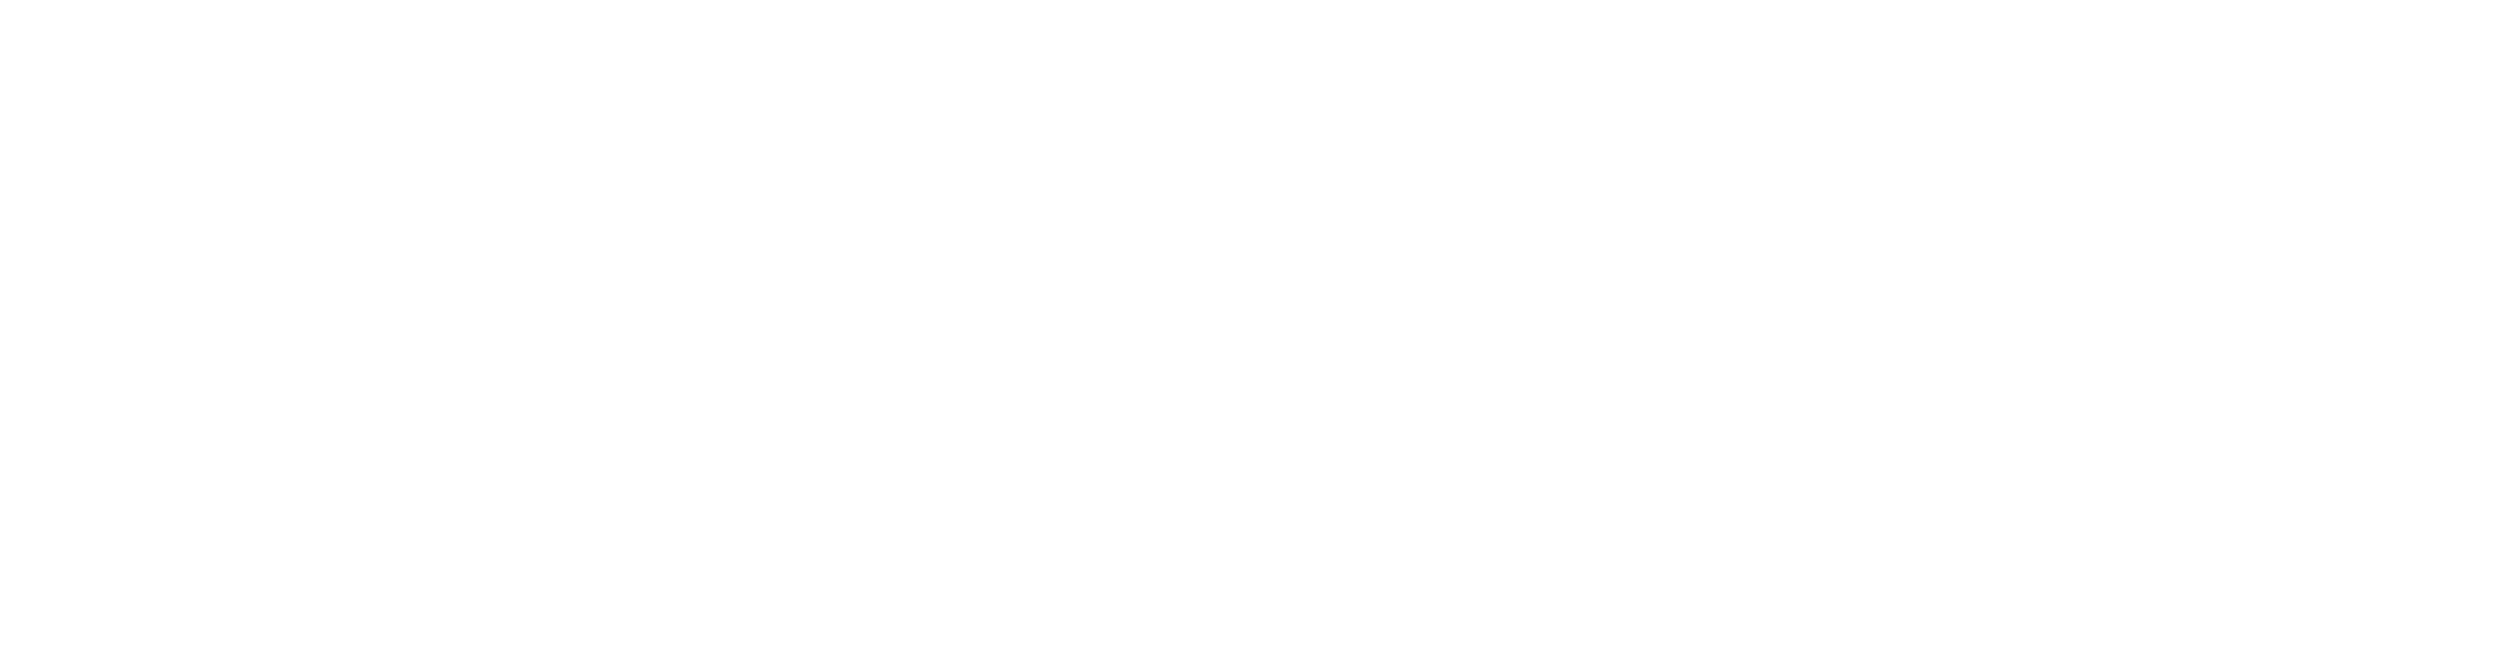 pinterest-logo white-transparent.png